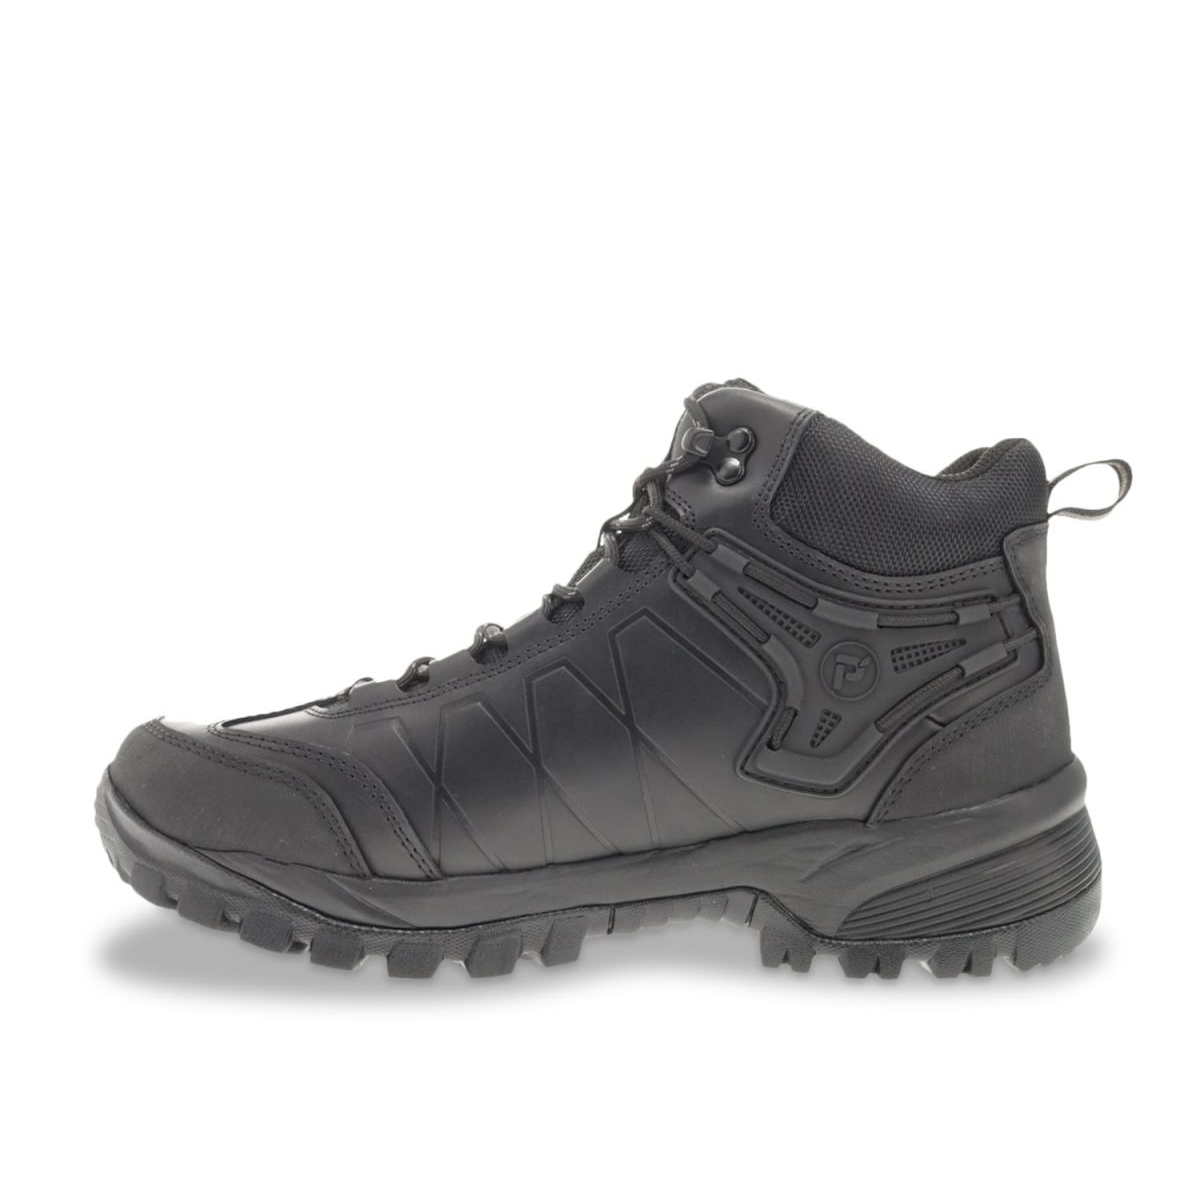 Propet Men's Ridge Walker Force Hiking Boots Black - MBA052LBLK BLACK - BLACK, 15